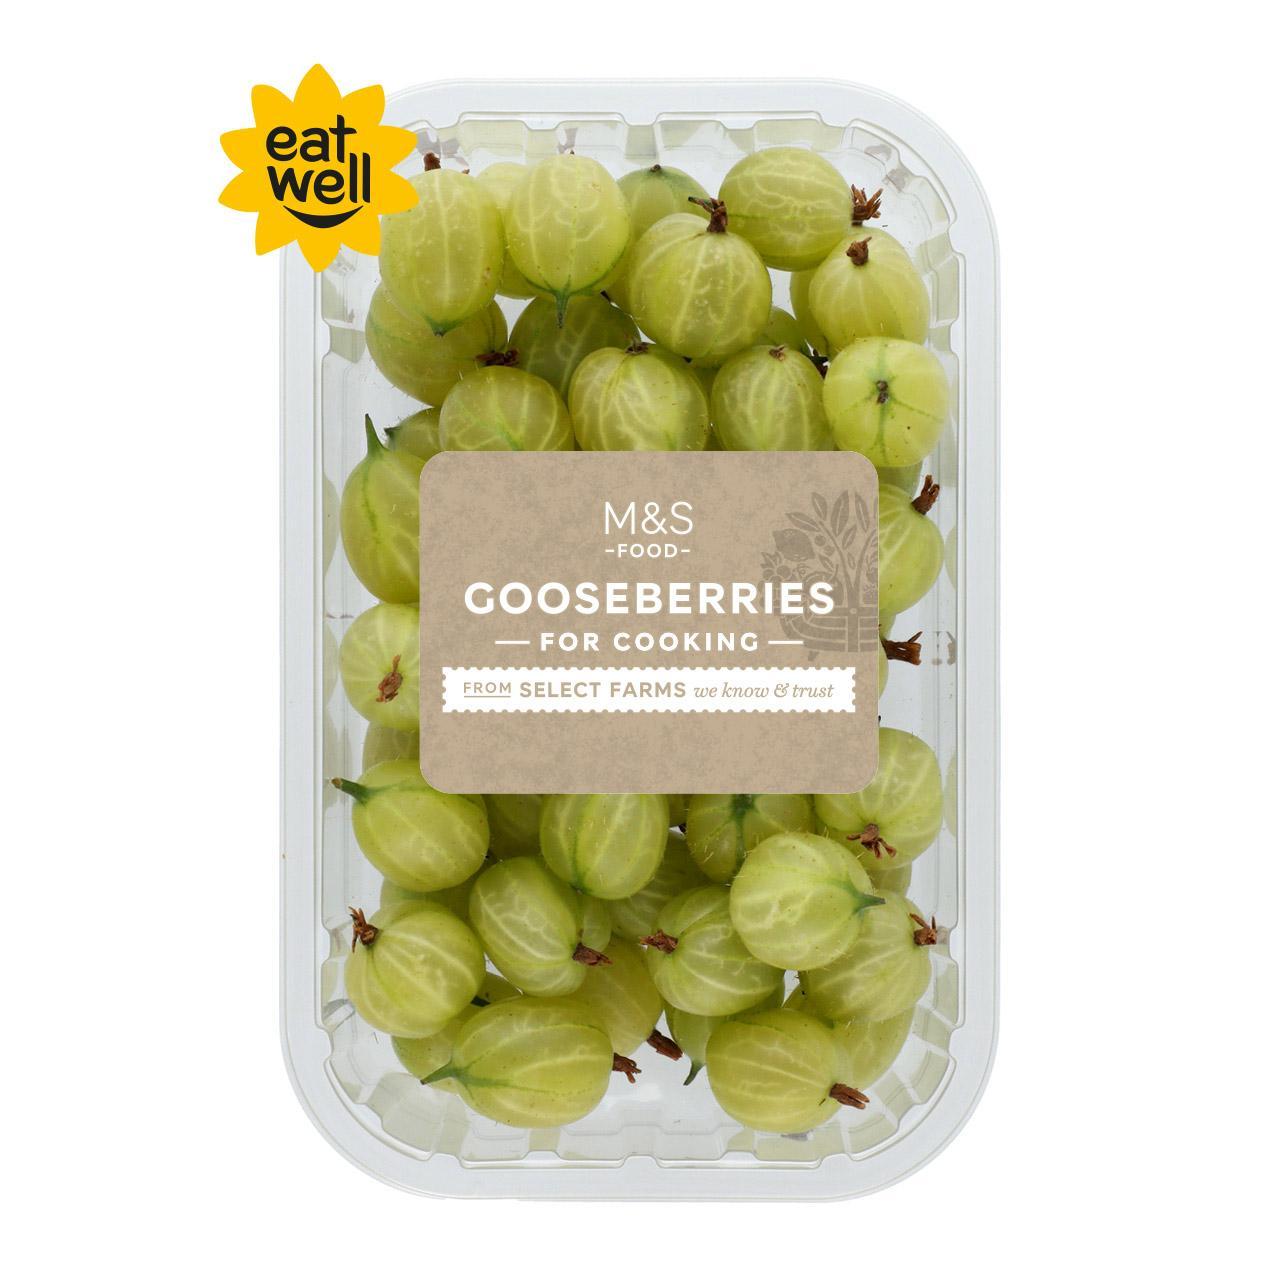 M&S Gooseberries